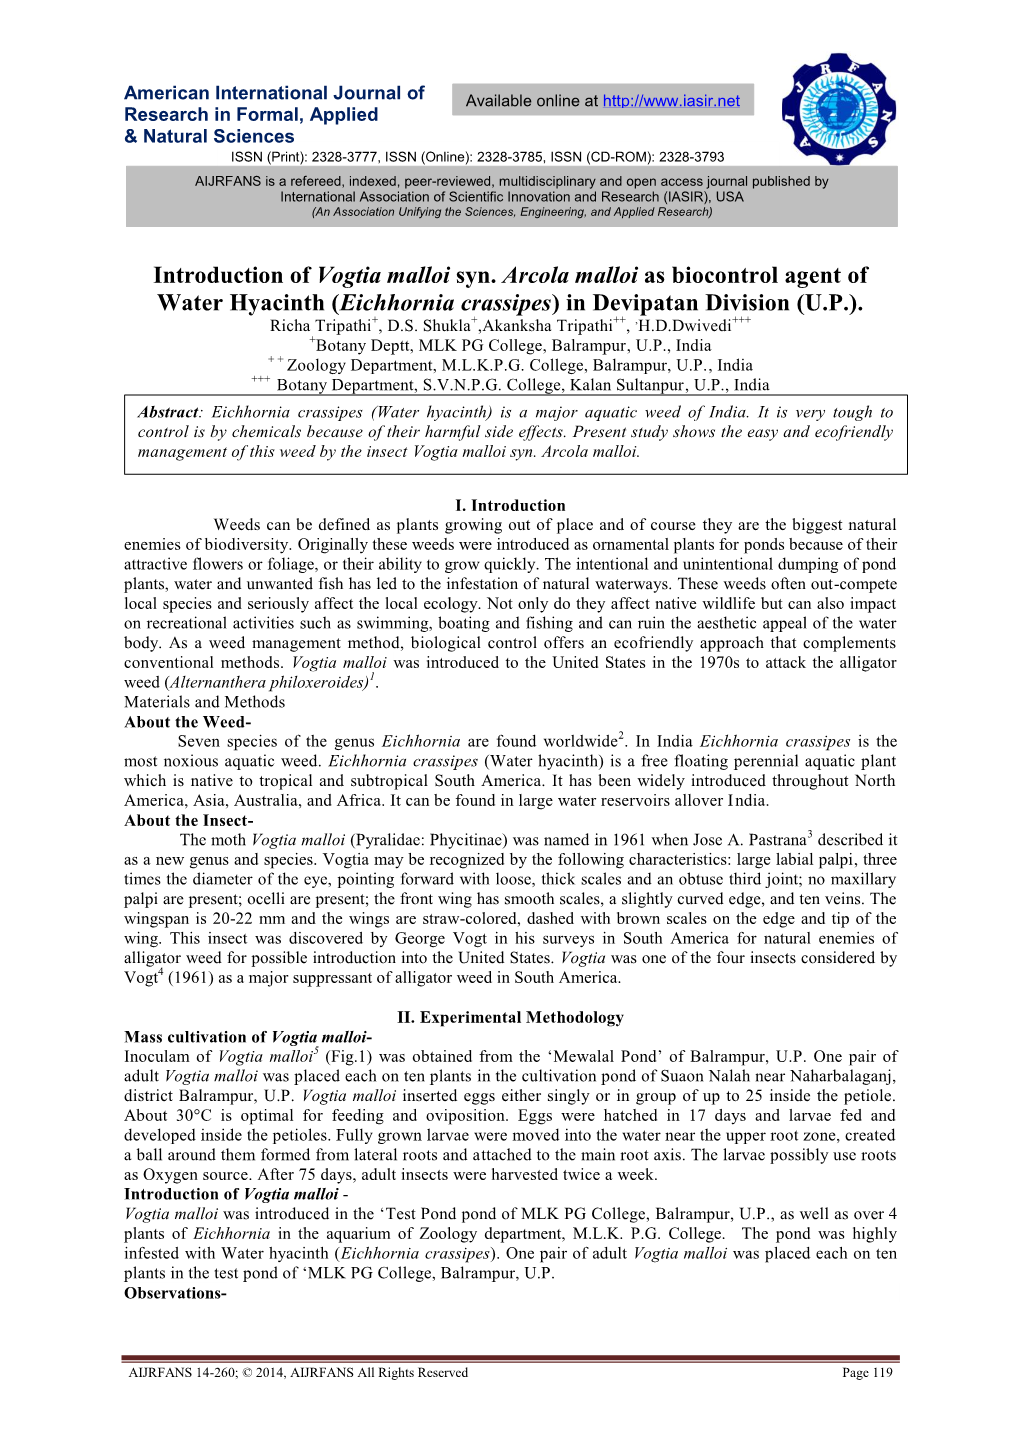 Introduction of Vogtia Malloi Syn. Arcola Malloi As Biocontrol Agent of Water Hyacinth (Eichhornia Crassipes) in Devipatan Division (U.P.)